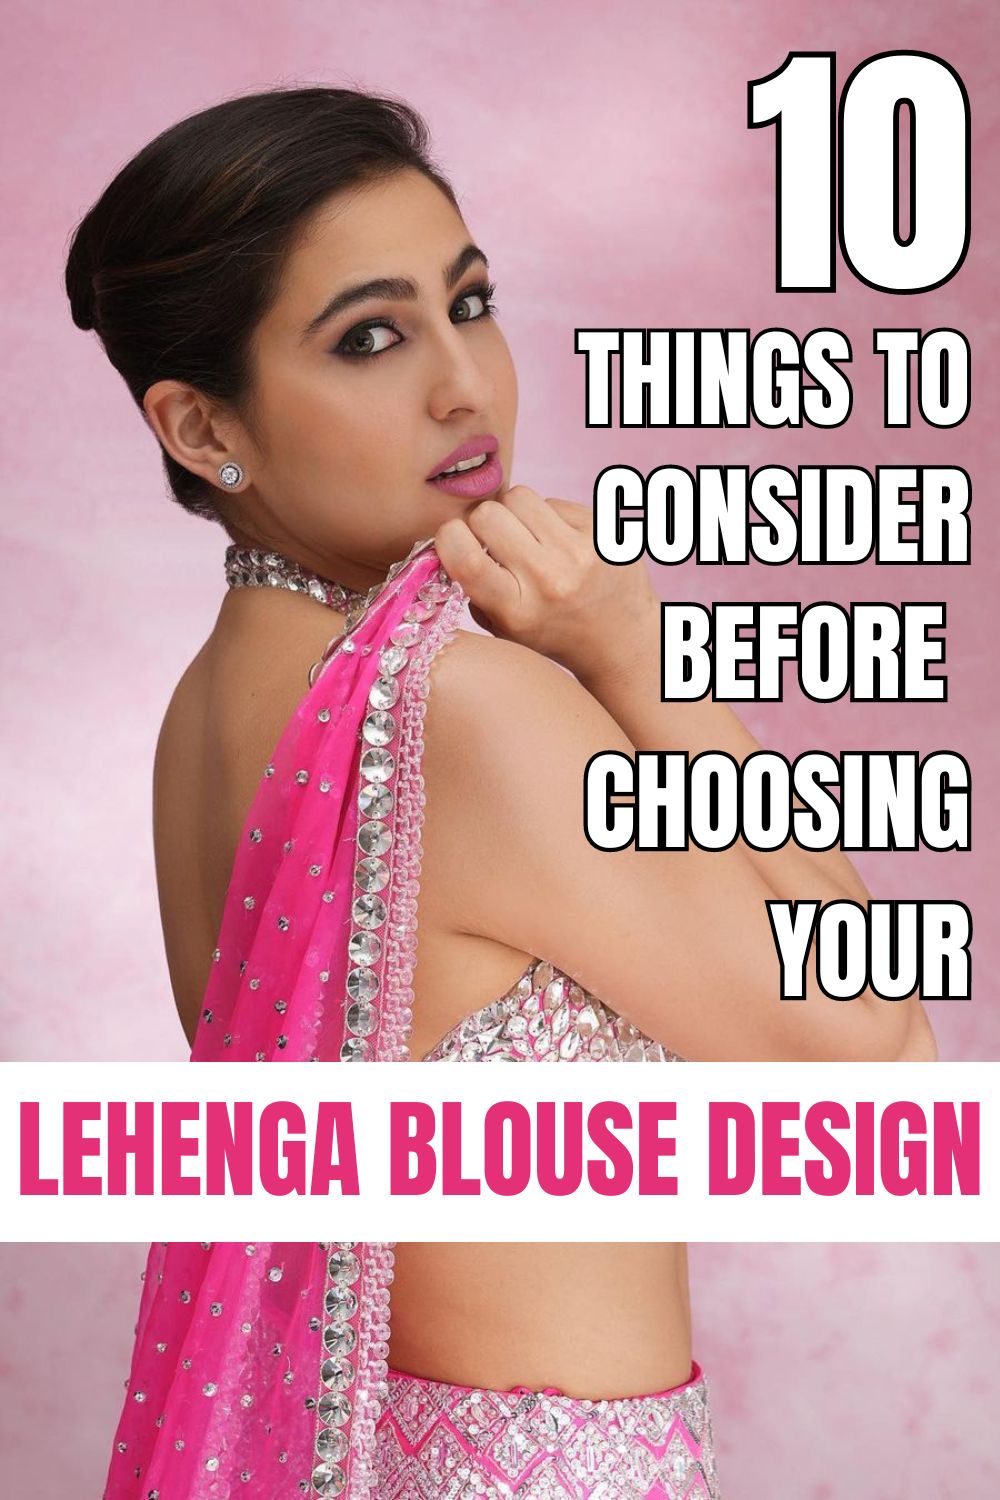 10 Things to Consider Before Choosing Your Lehenga Blouse Design